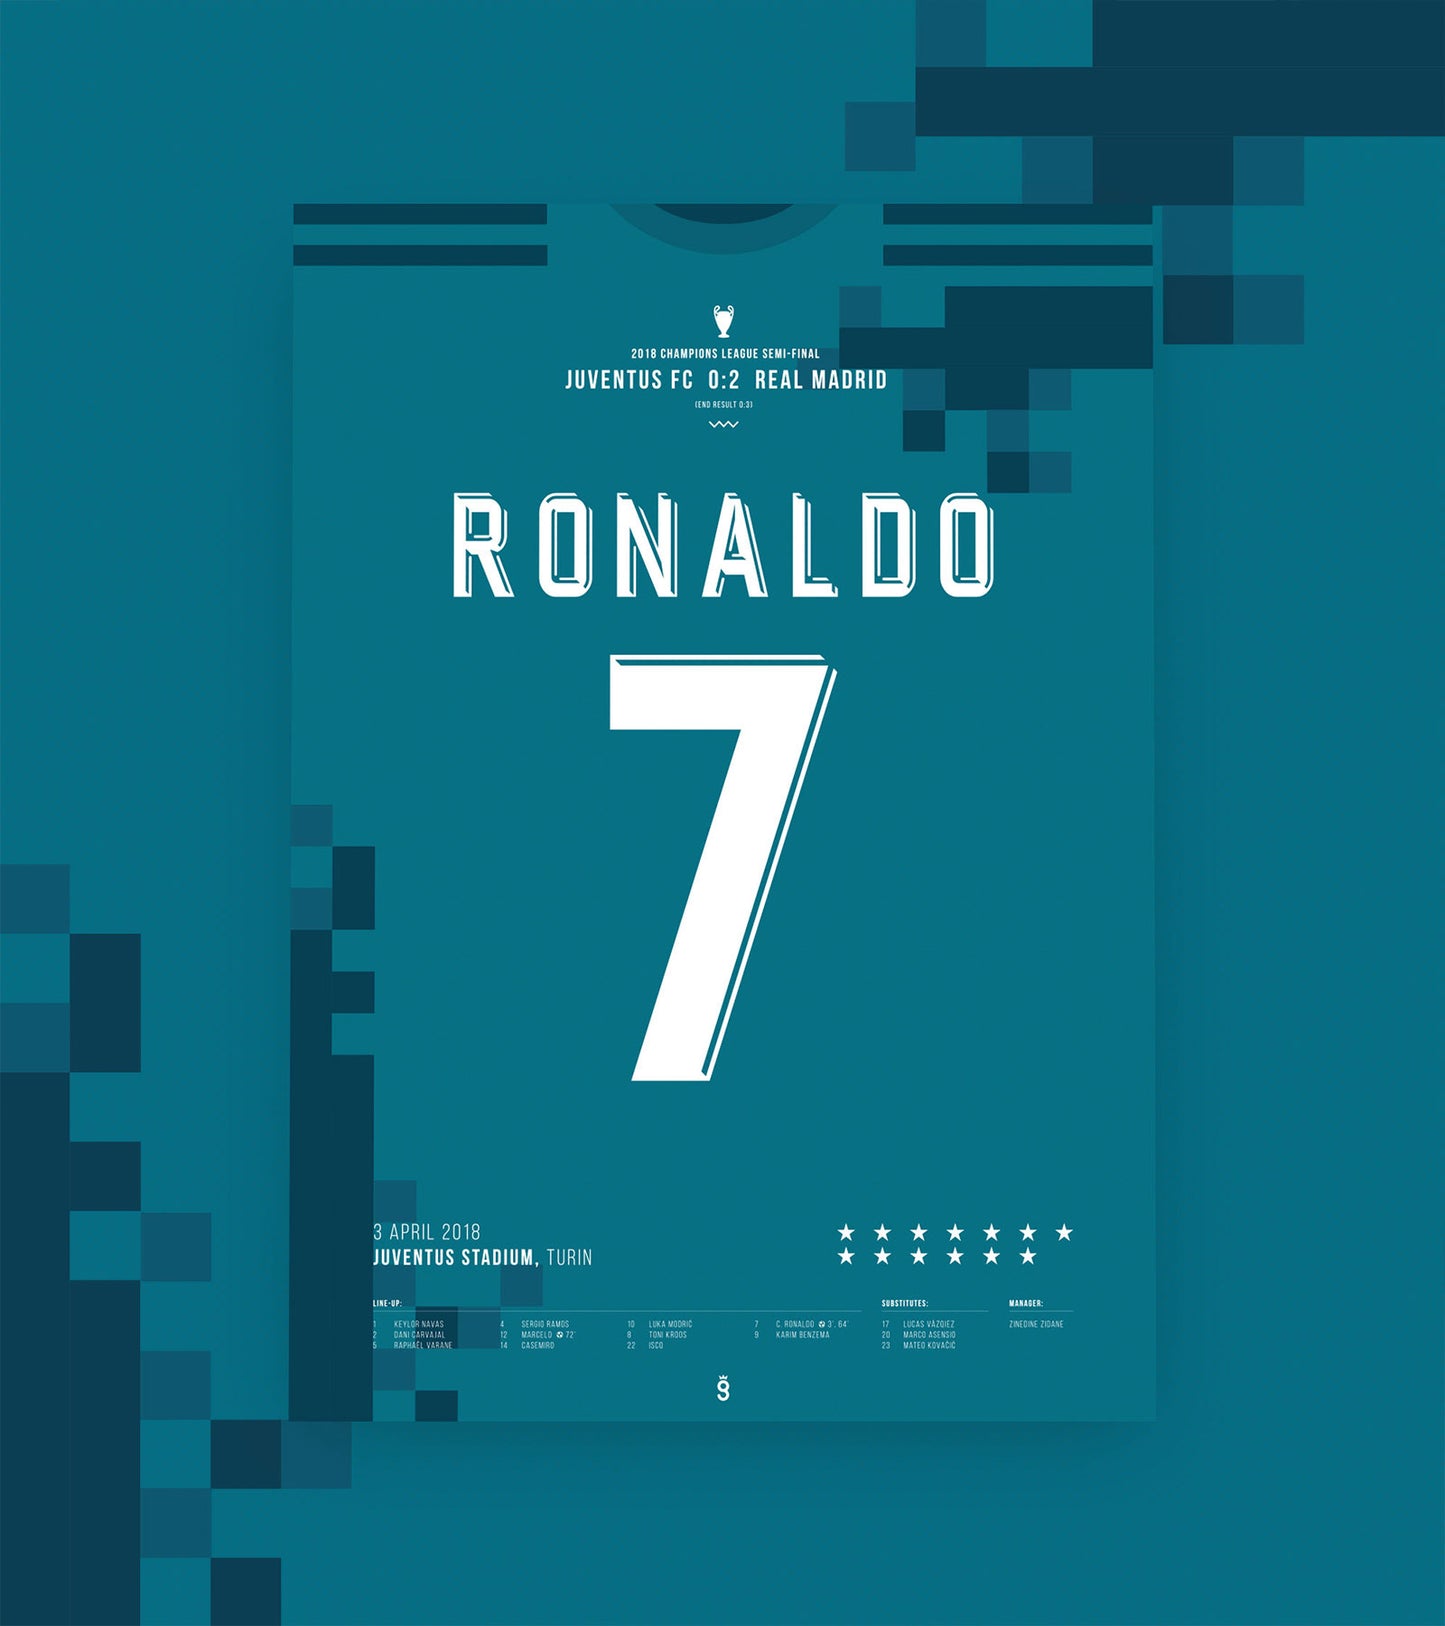 Ronaldo's stunning overhead kick for Real Madrid (Jersey ver.)